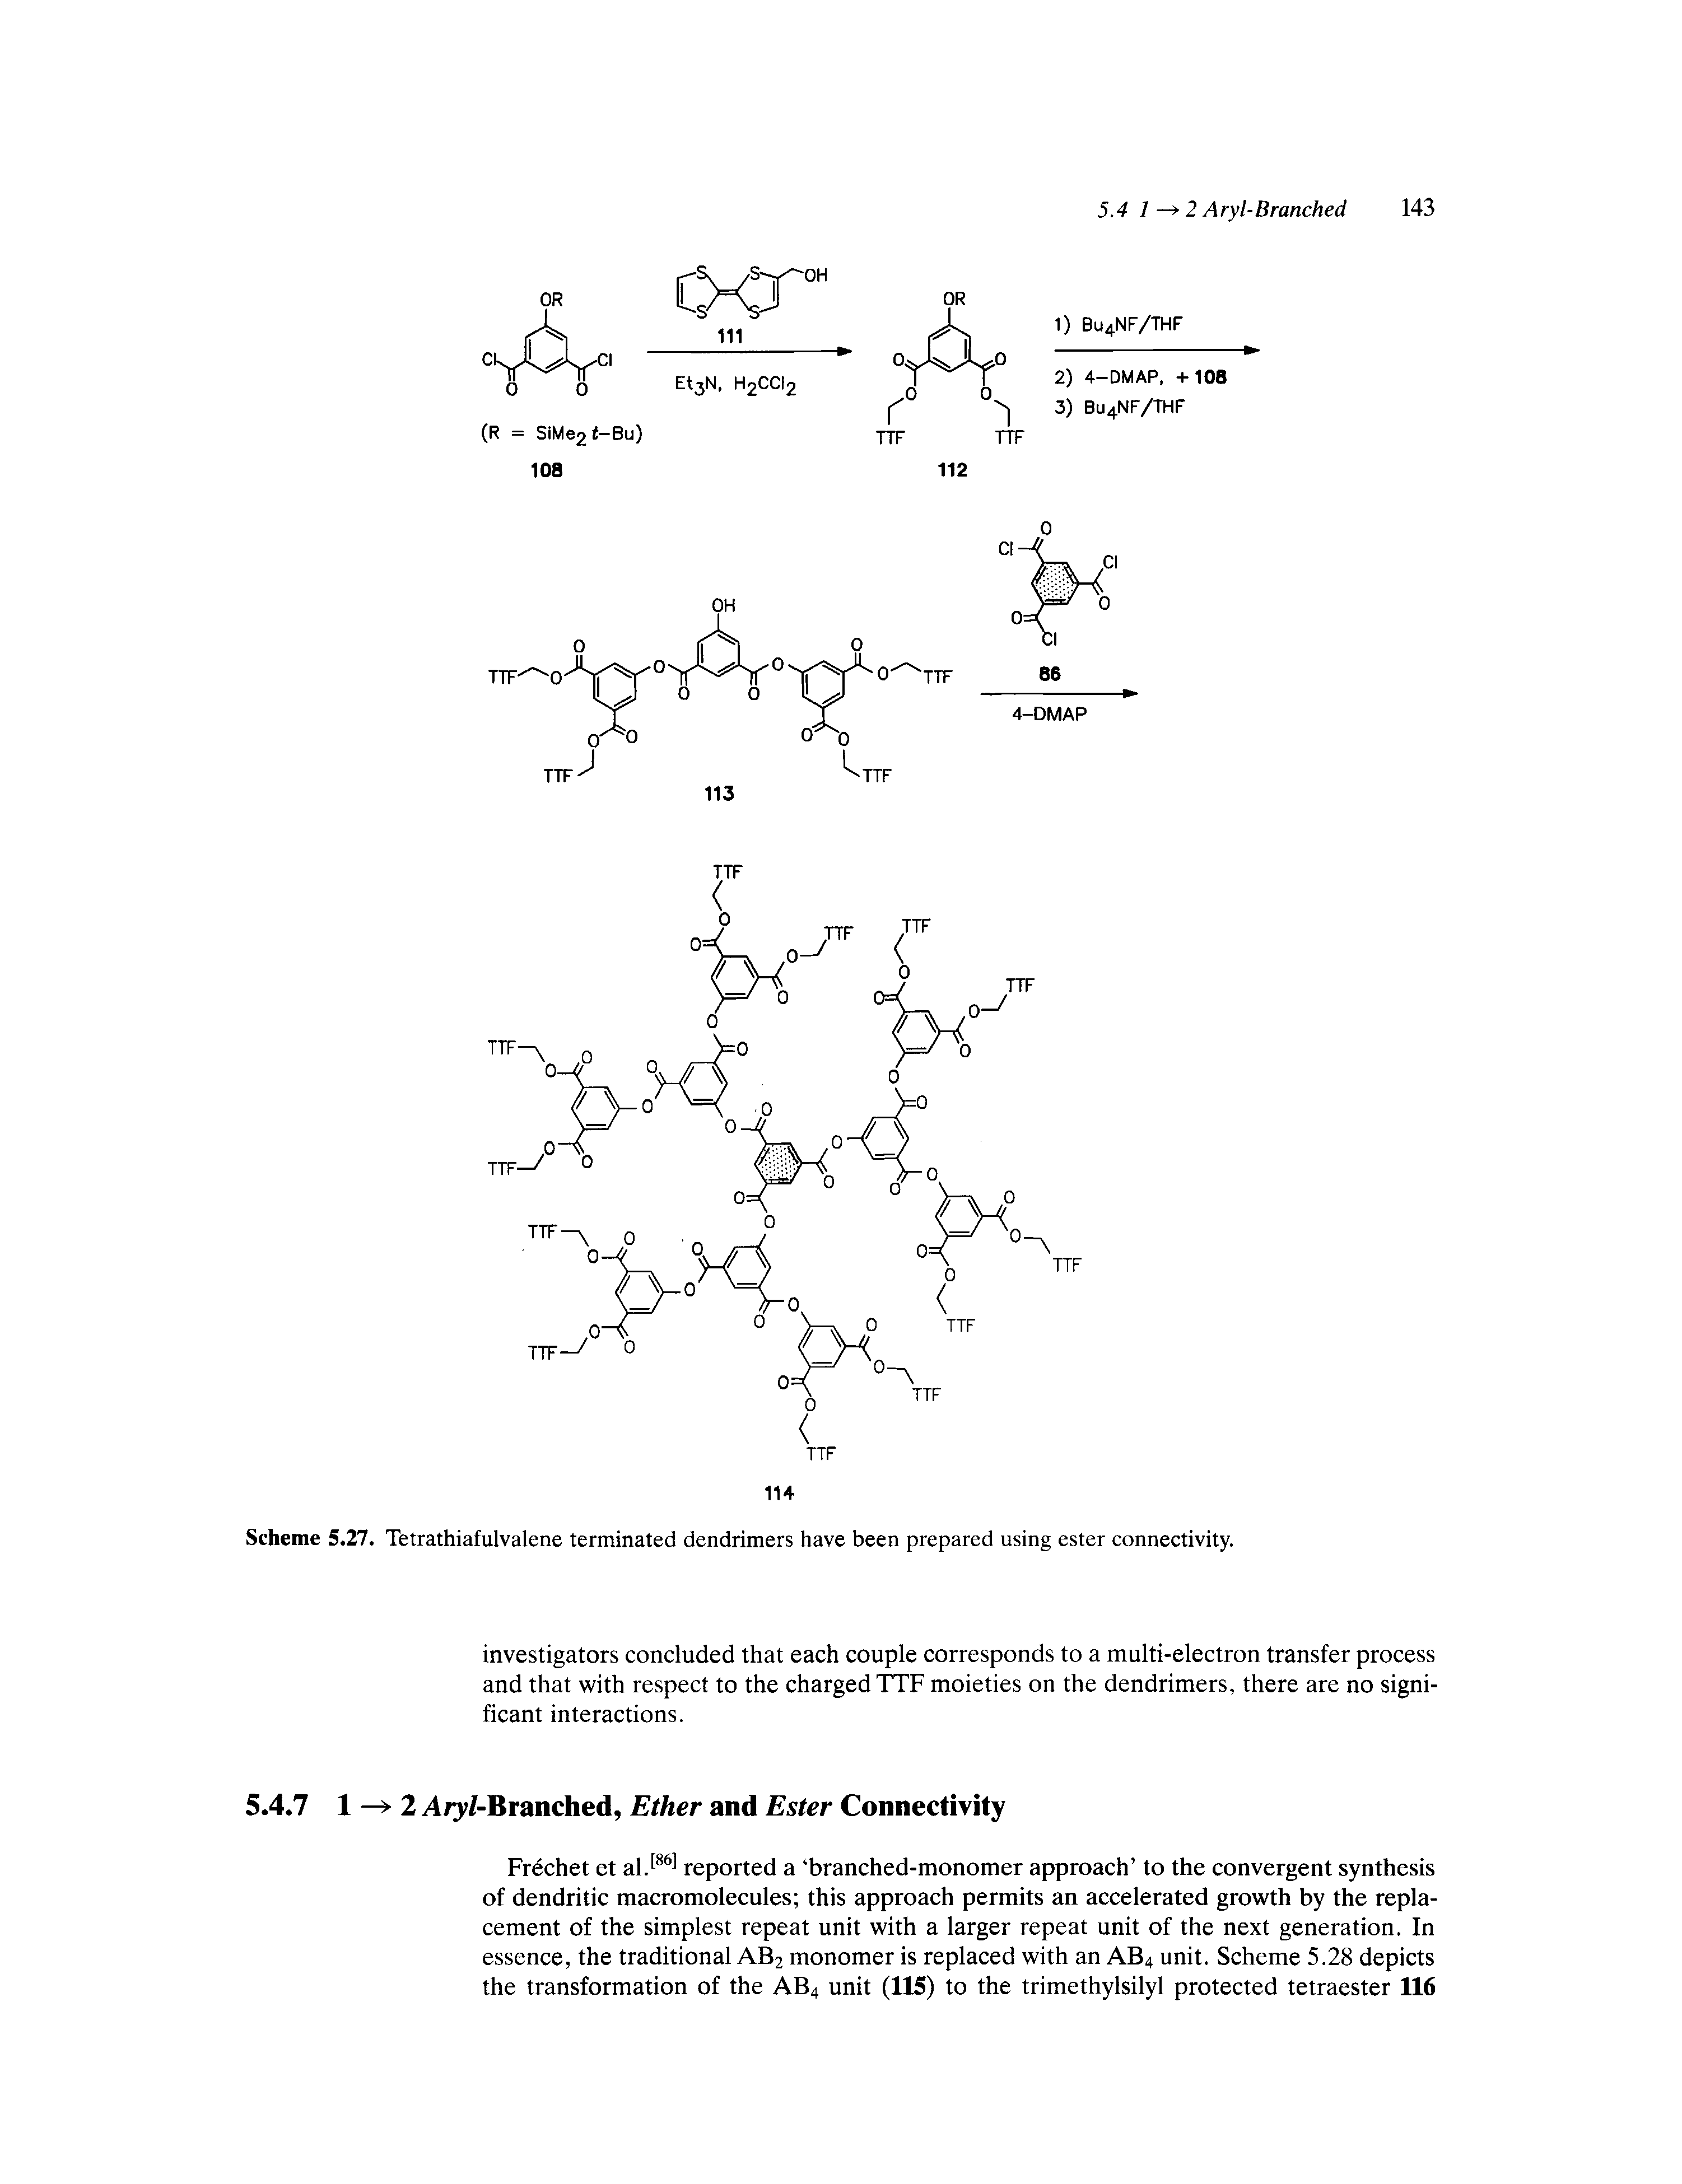 Scheme 5.27. Tetrathiafulvalene terminated dendrimers have been prepared using ester connectivity.